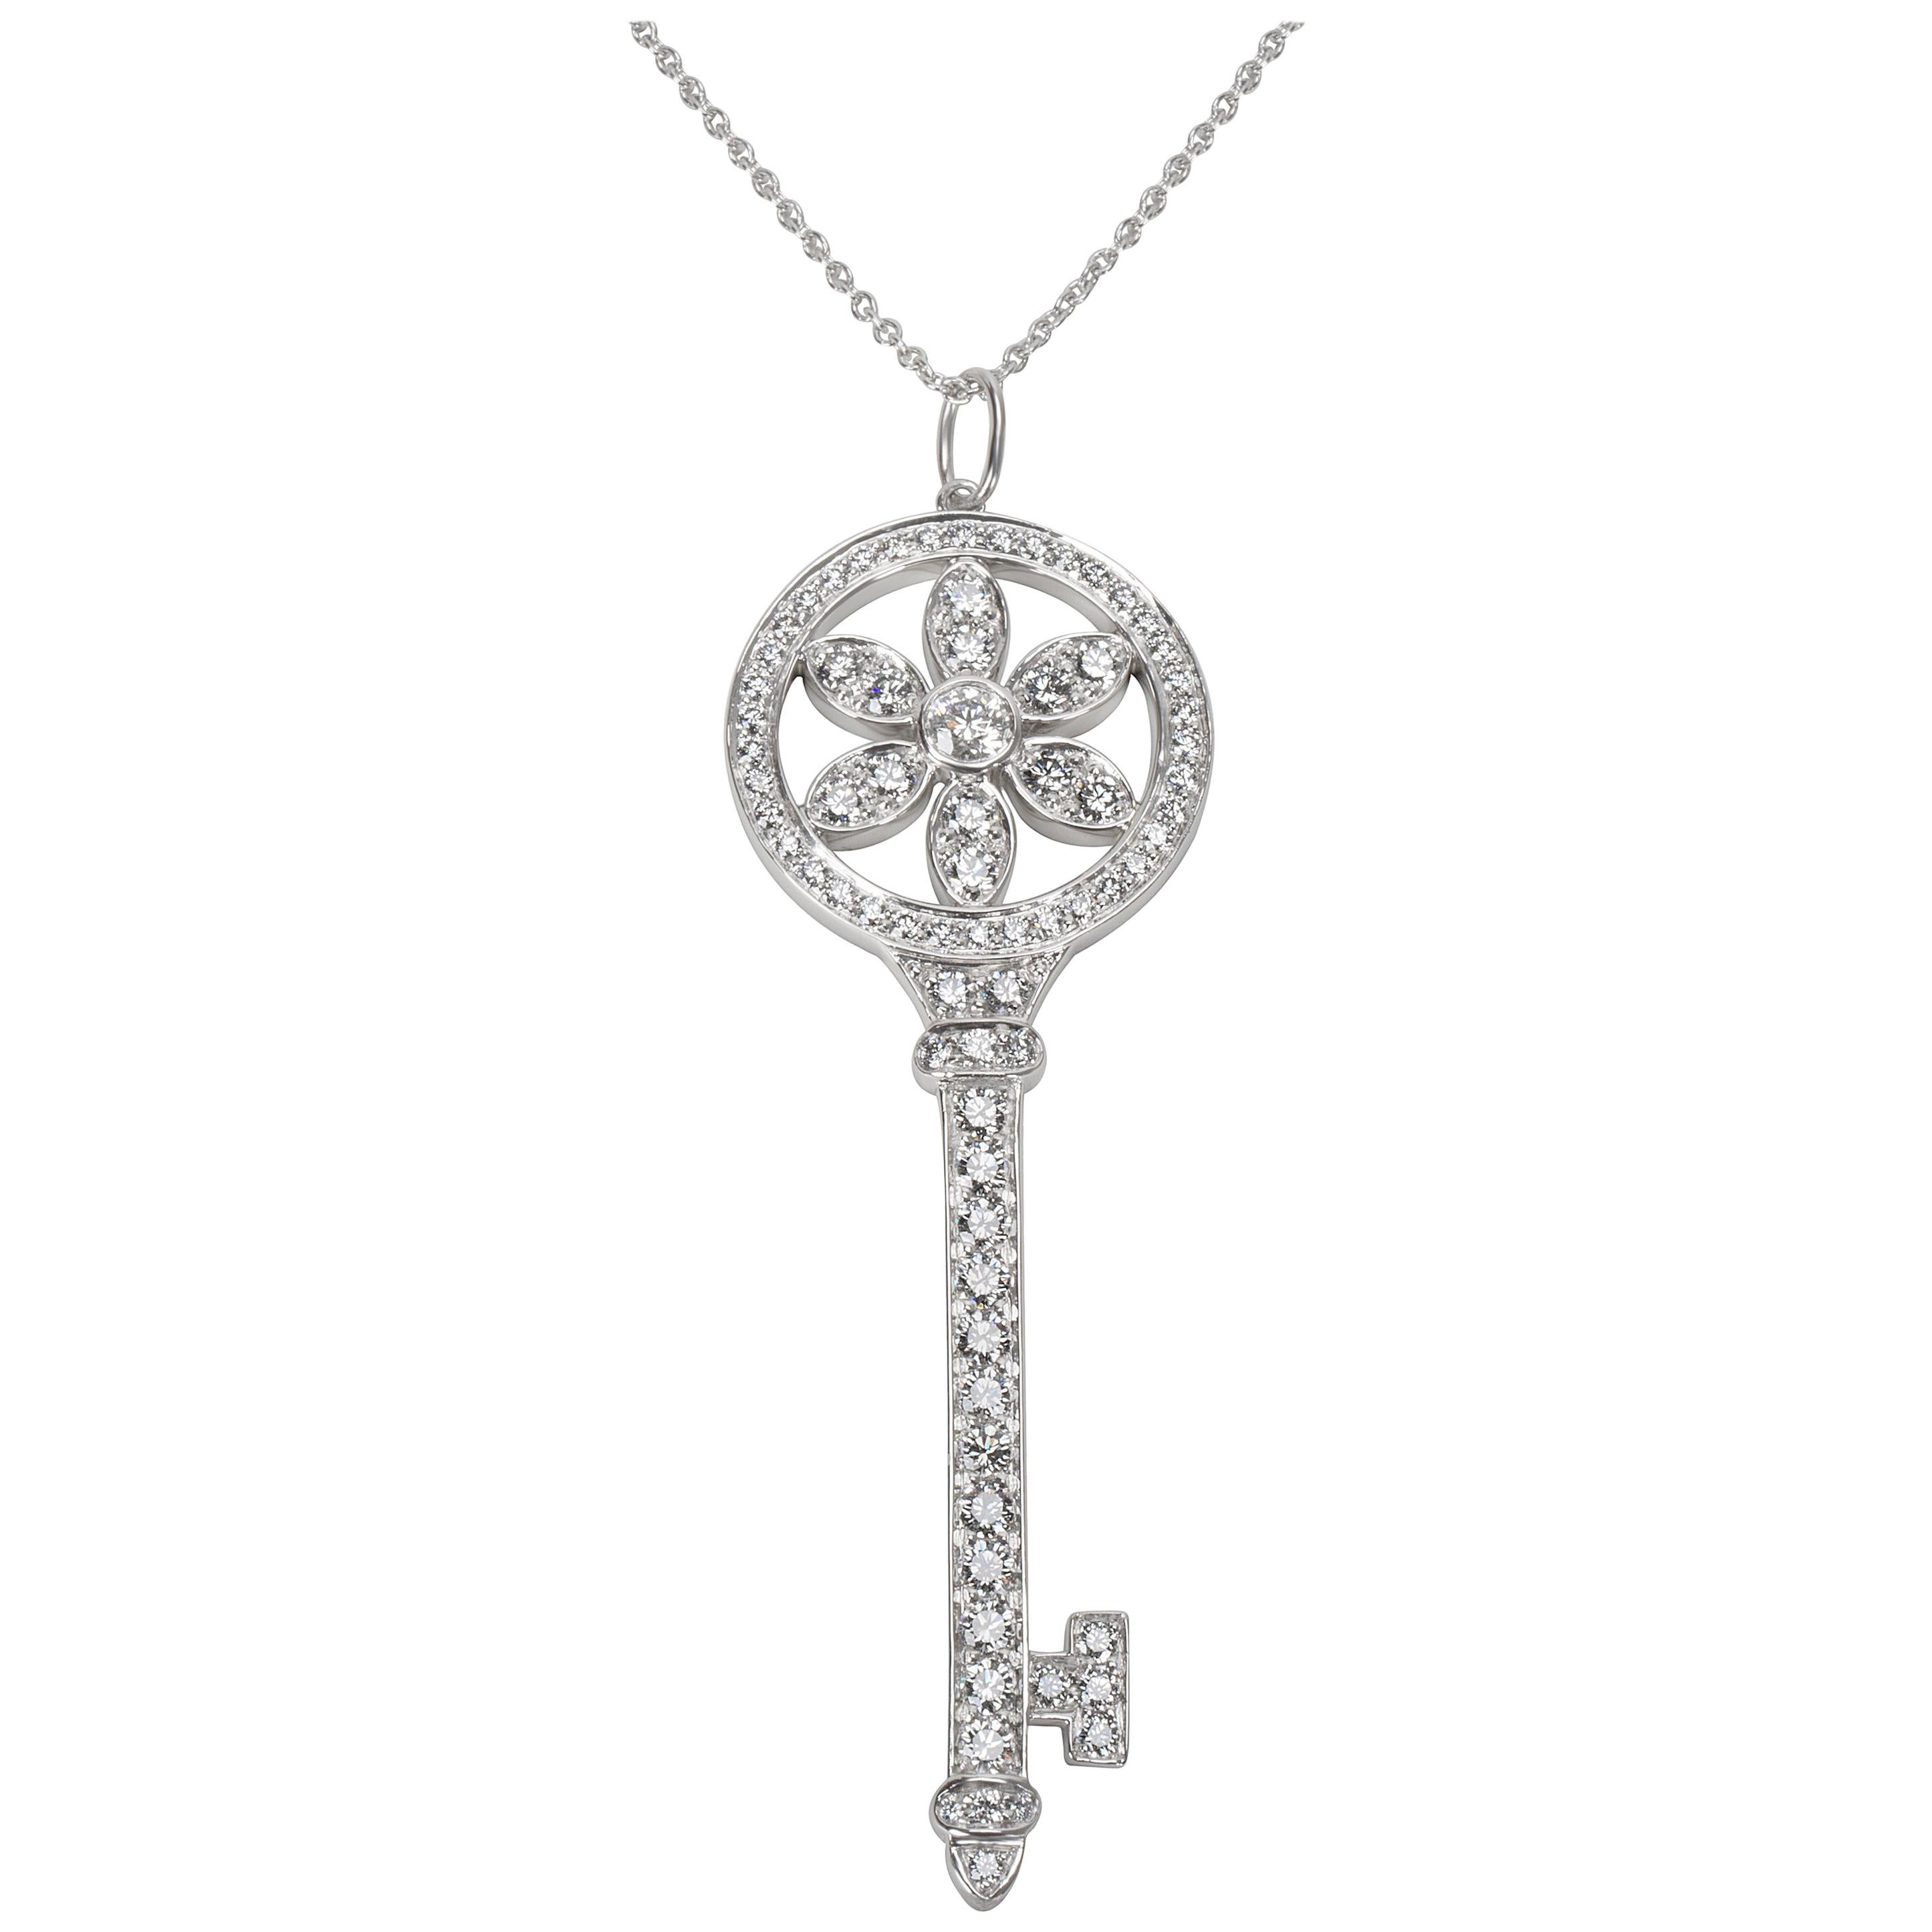 Tiffany & Co. Daisy Key Necklace in Platinum 0.99 Carat